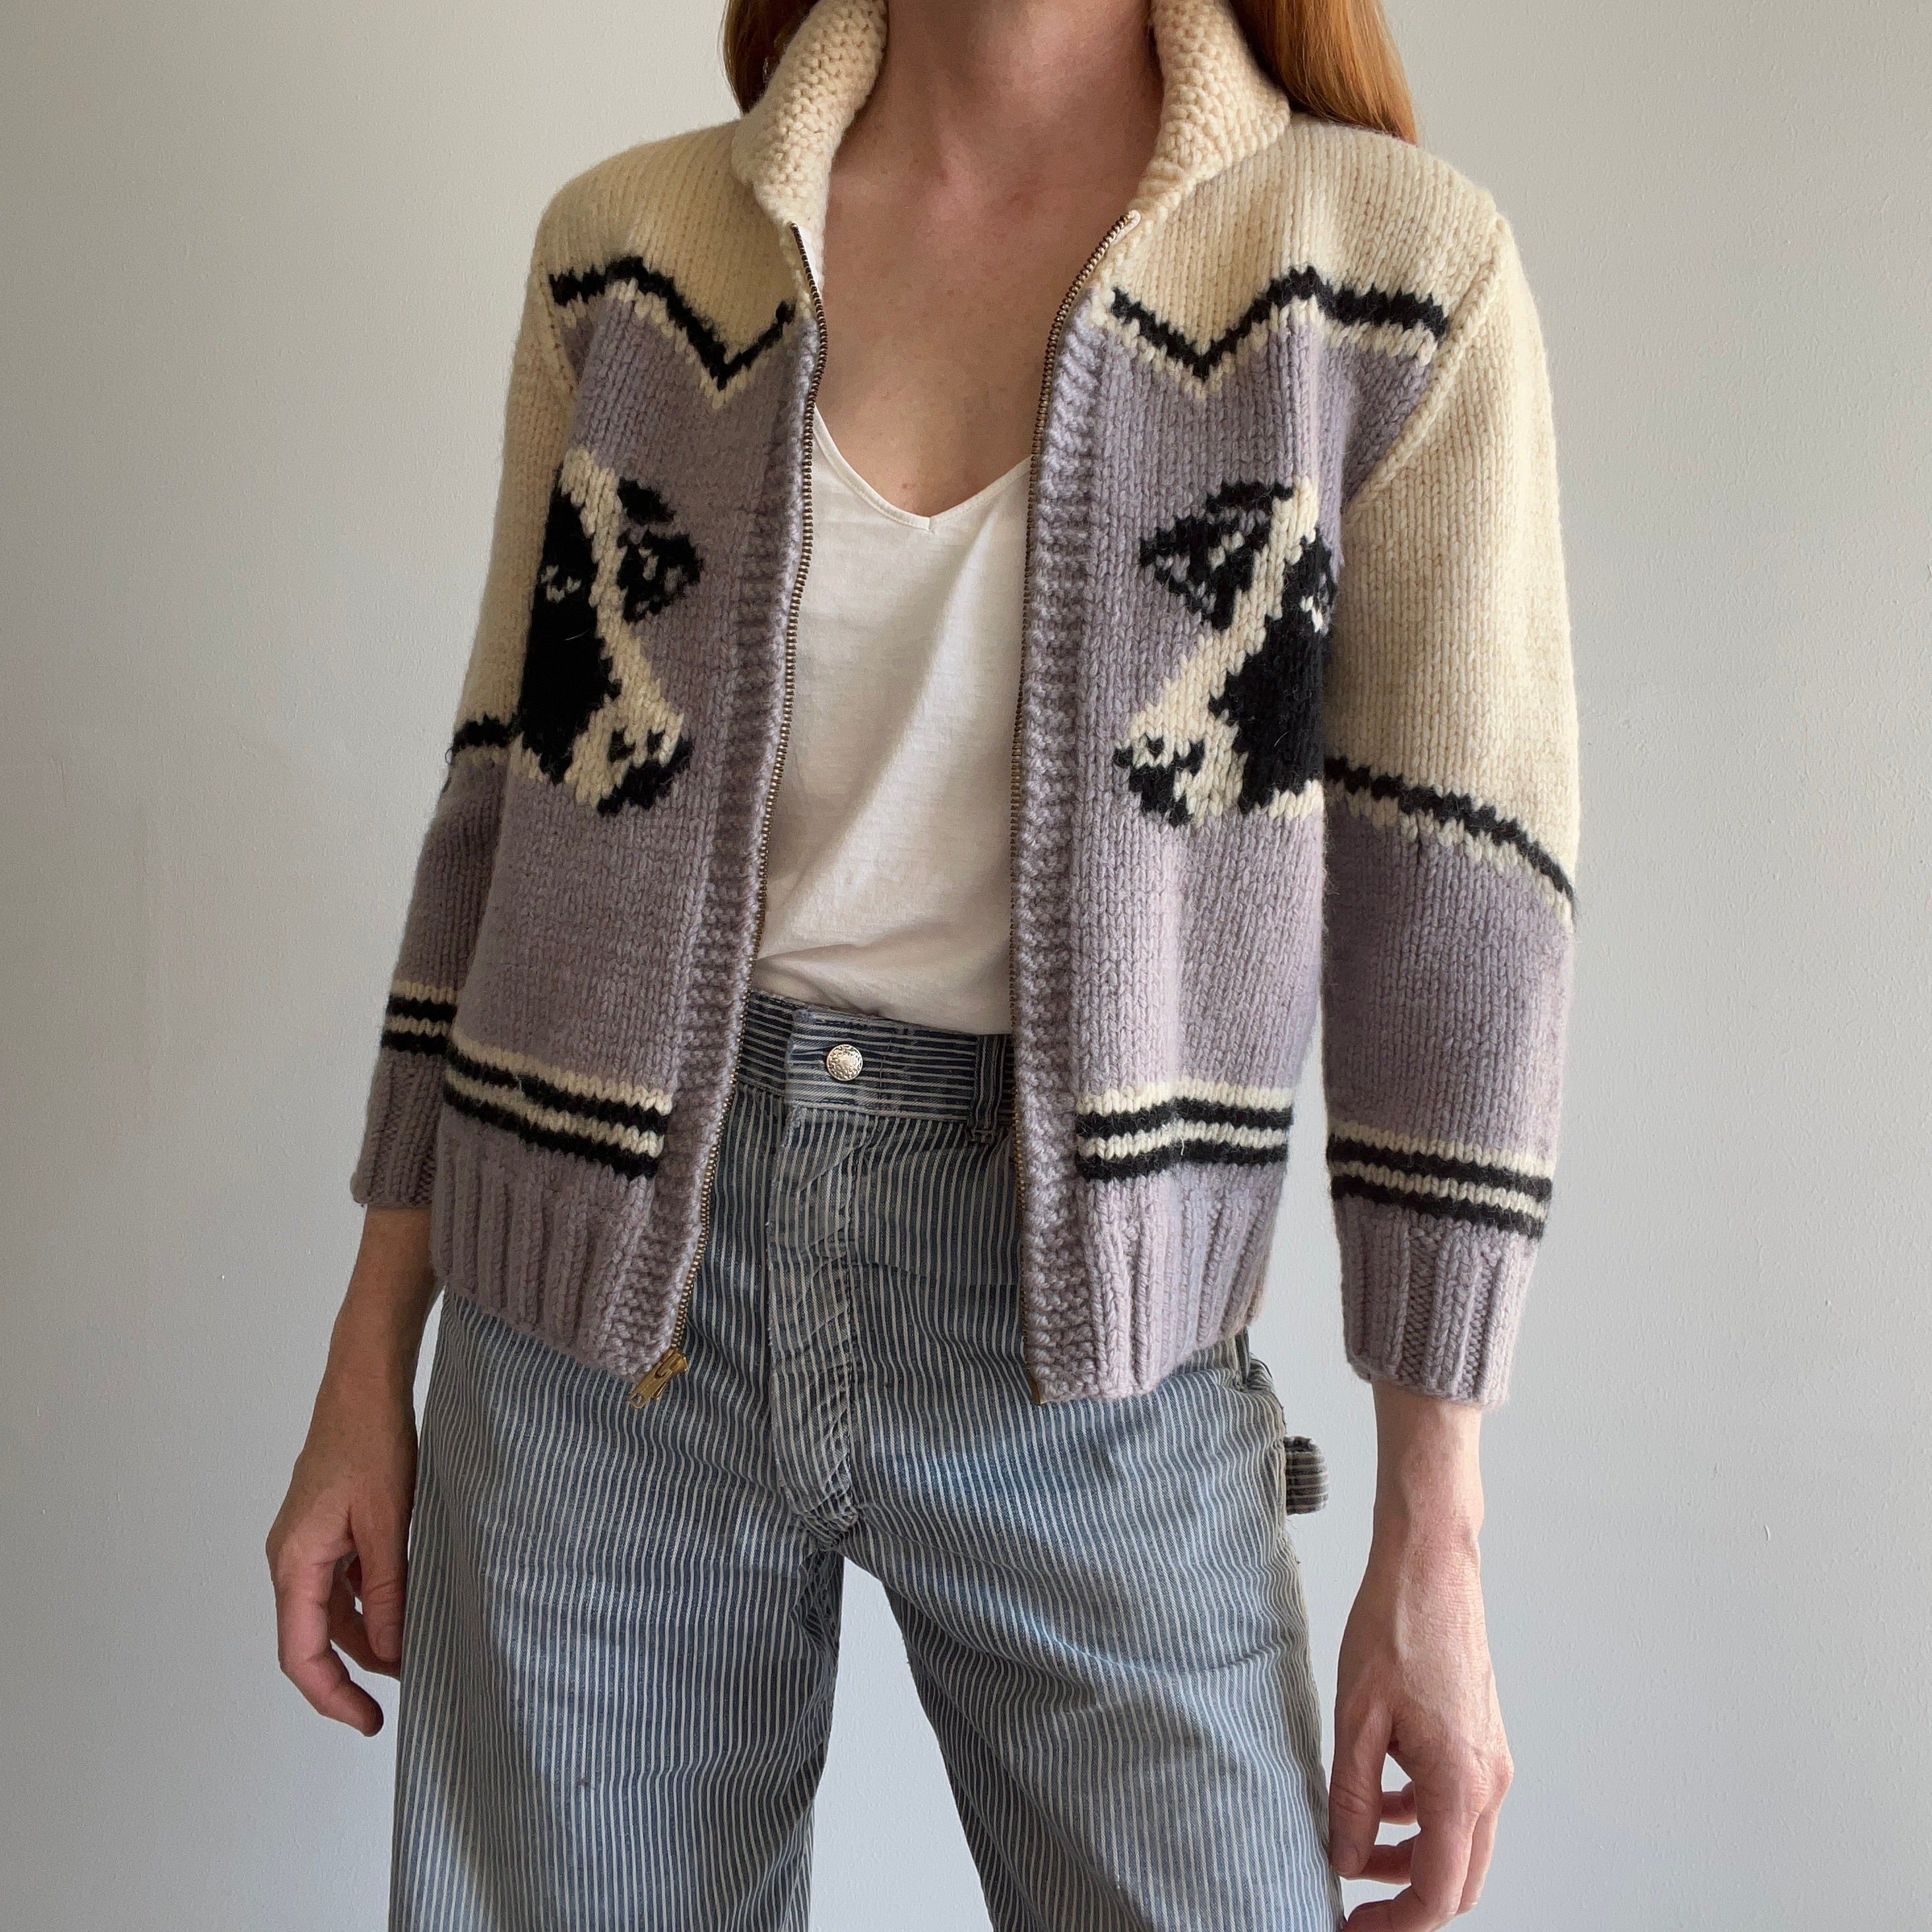 Authentic Cowichan Wool Knit Jacket Sweater Medium / Wolf / 